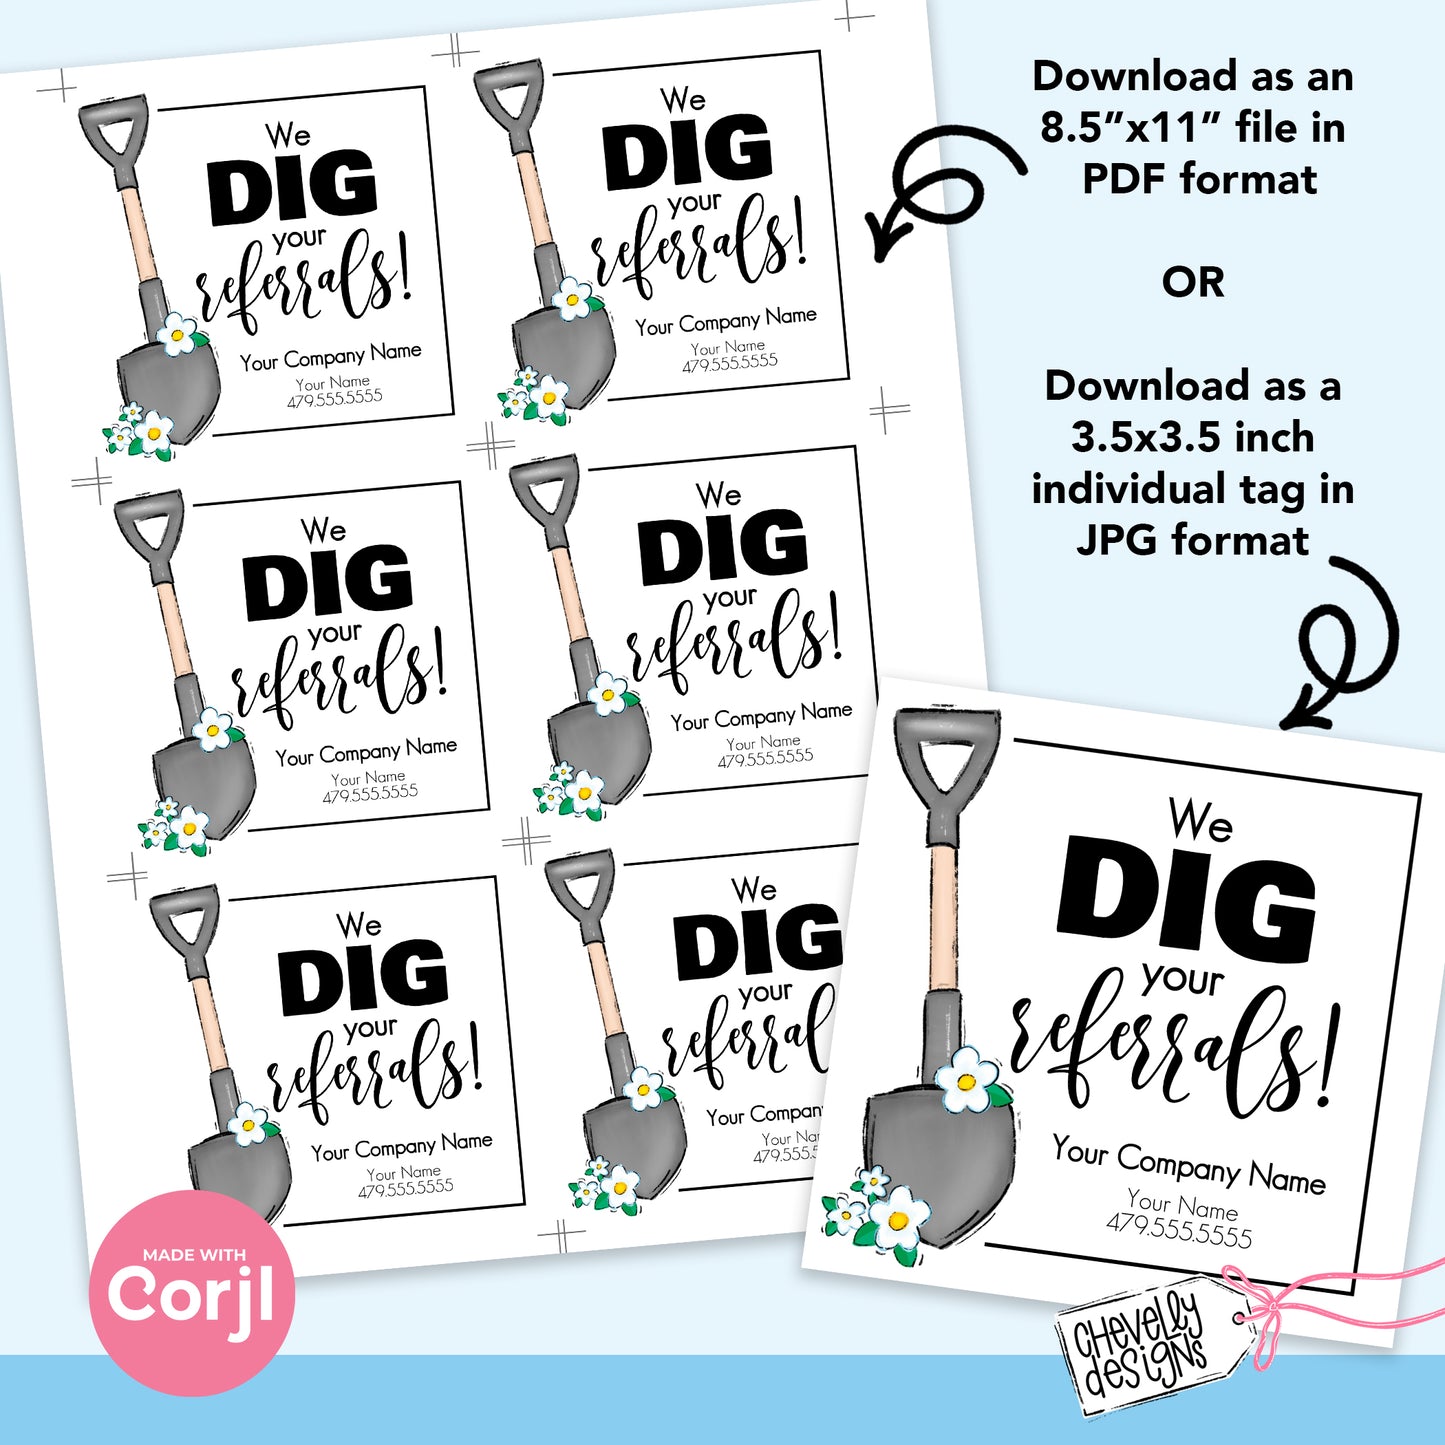 EDITABLE - We Dig Your Referrals - Shovel Flowers - Spring Business Referral Gift Tag - Printable Digital File